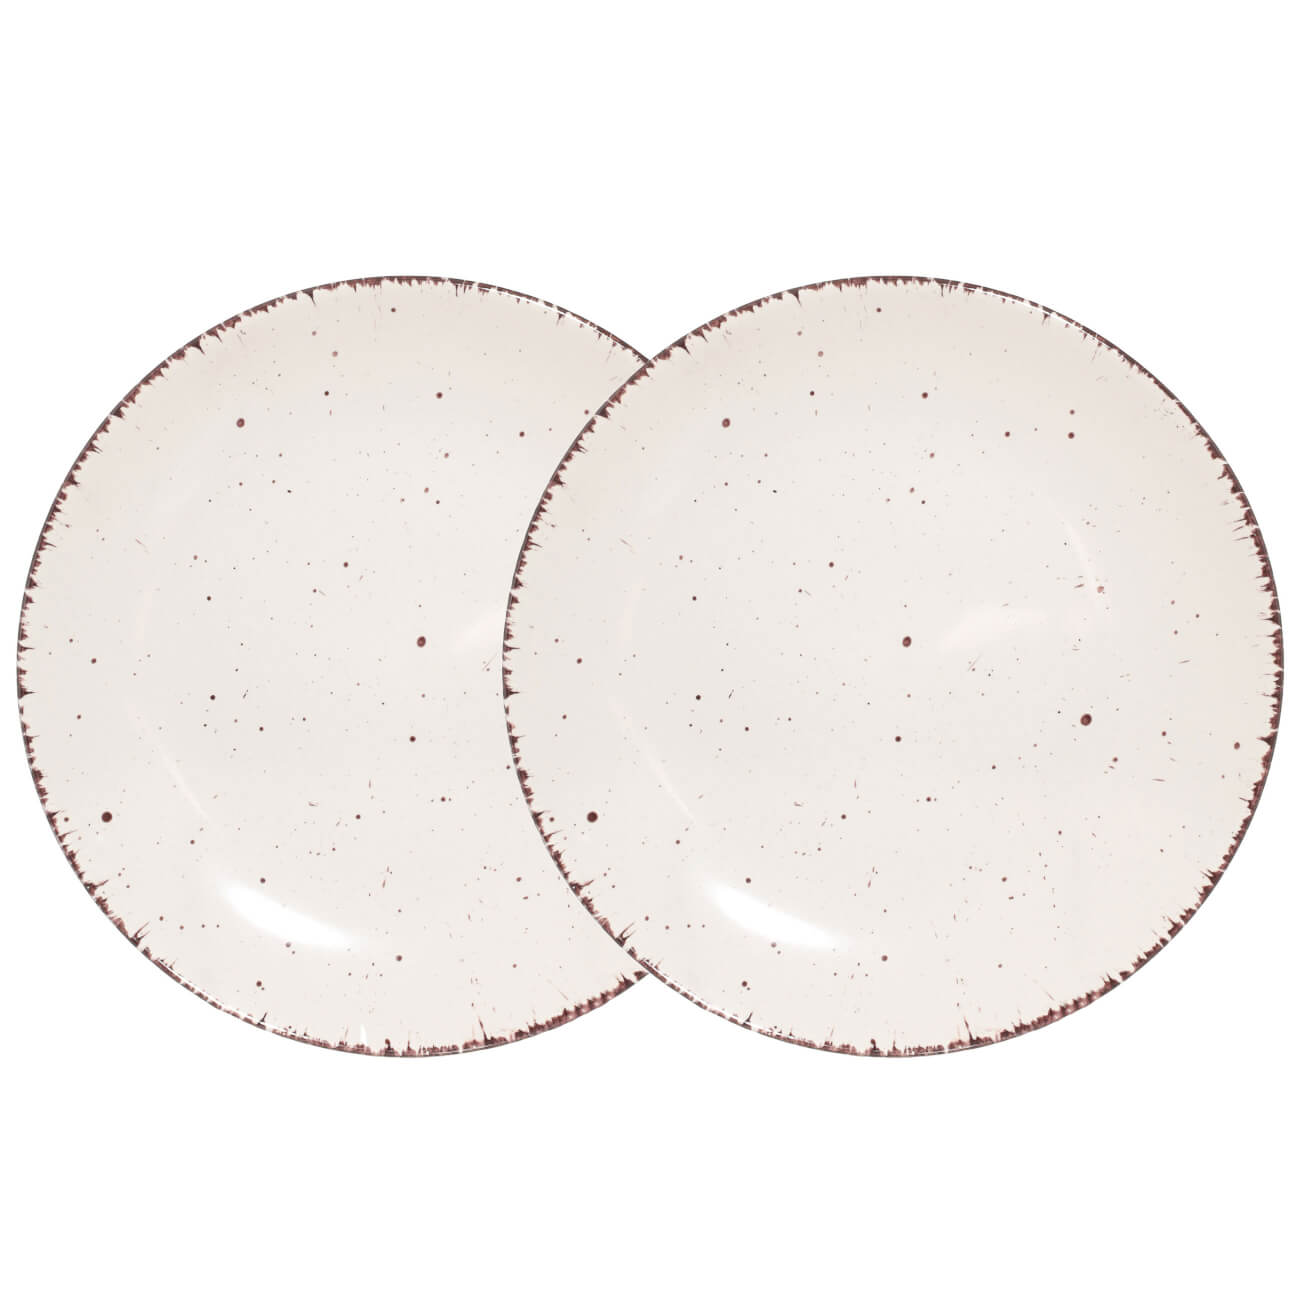 Тарелка закусочная, 21 см, 2 шт, керамика, бежевая, в крапинку, Speckled тарелка dudson камелот 22 9 см